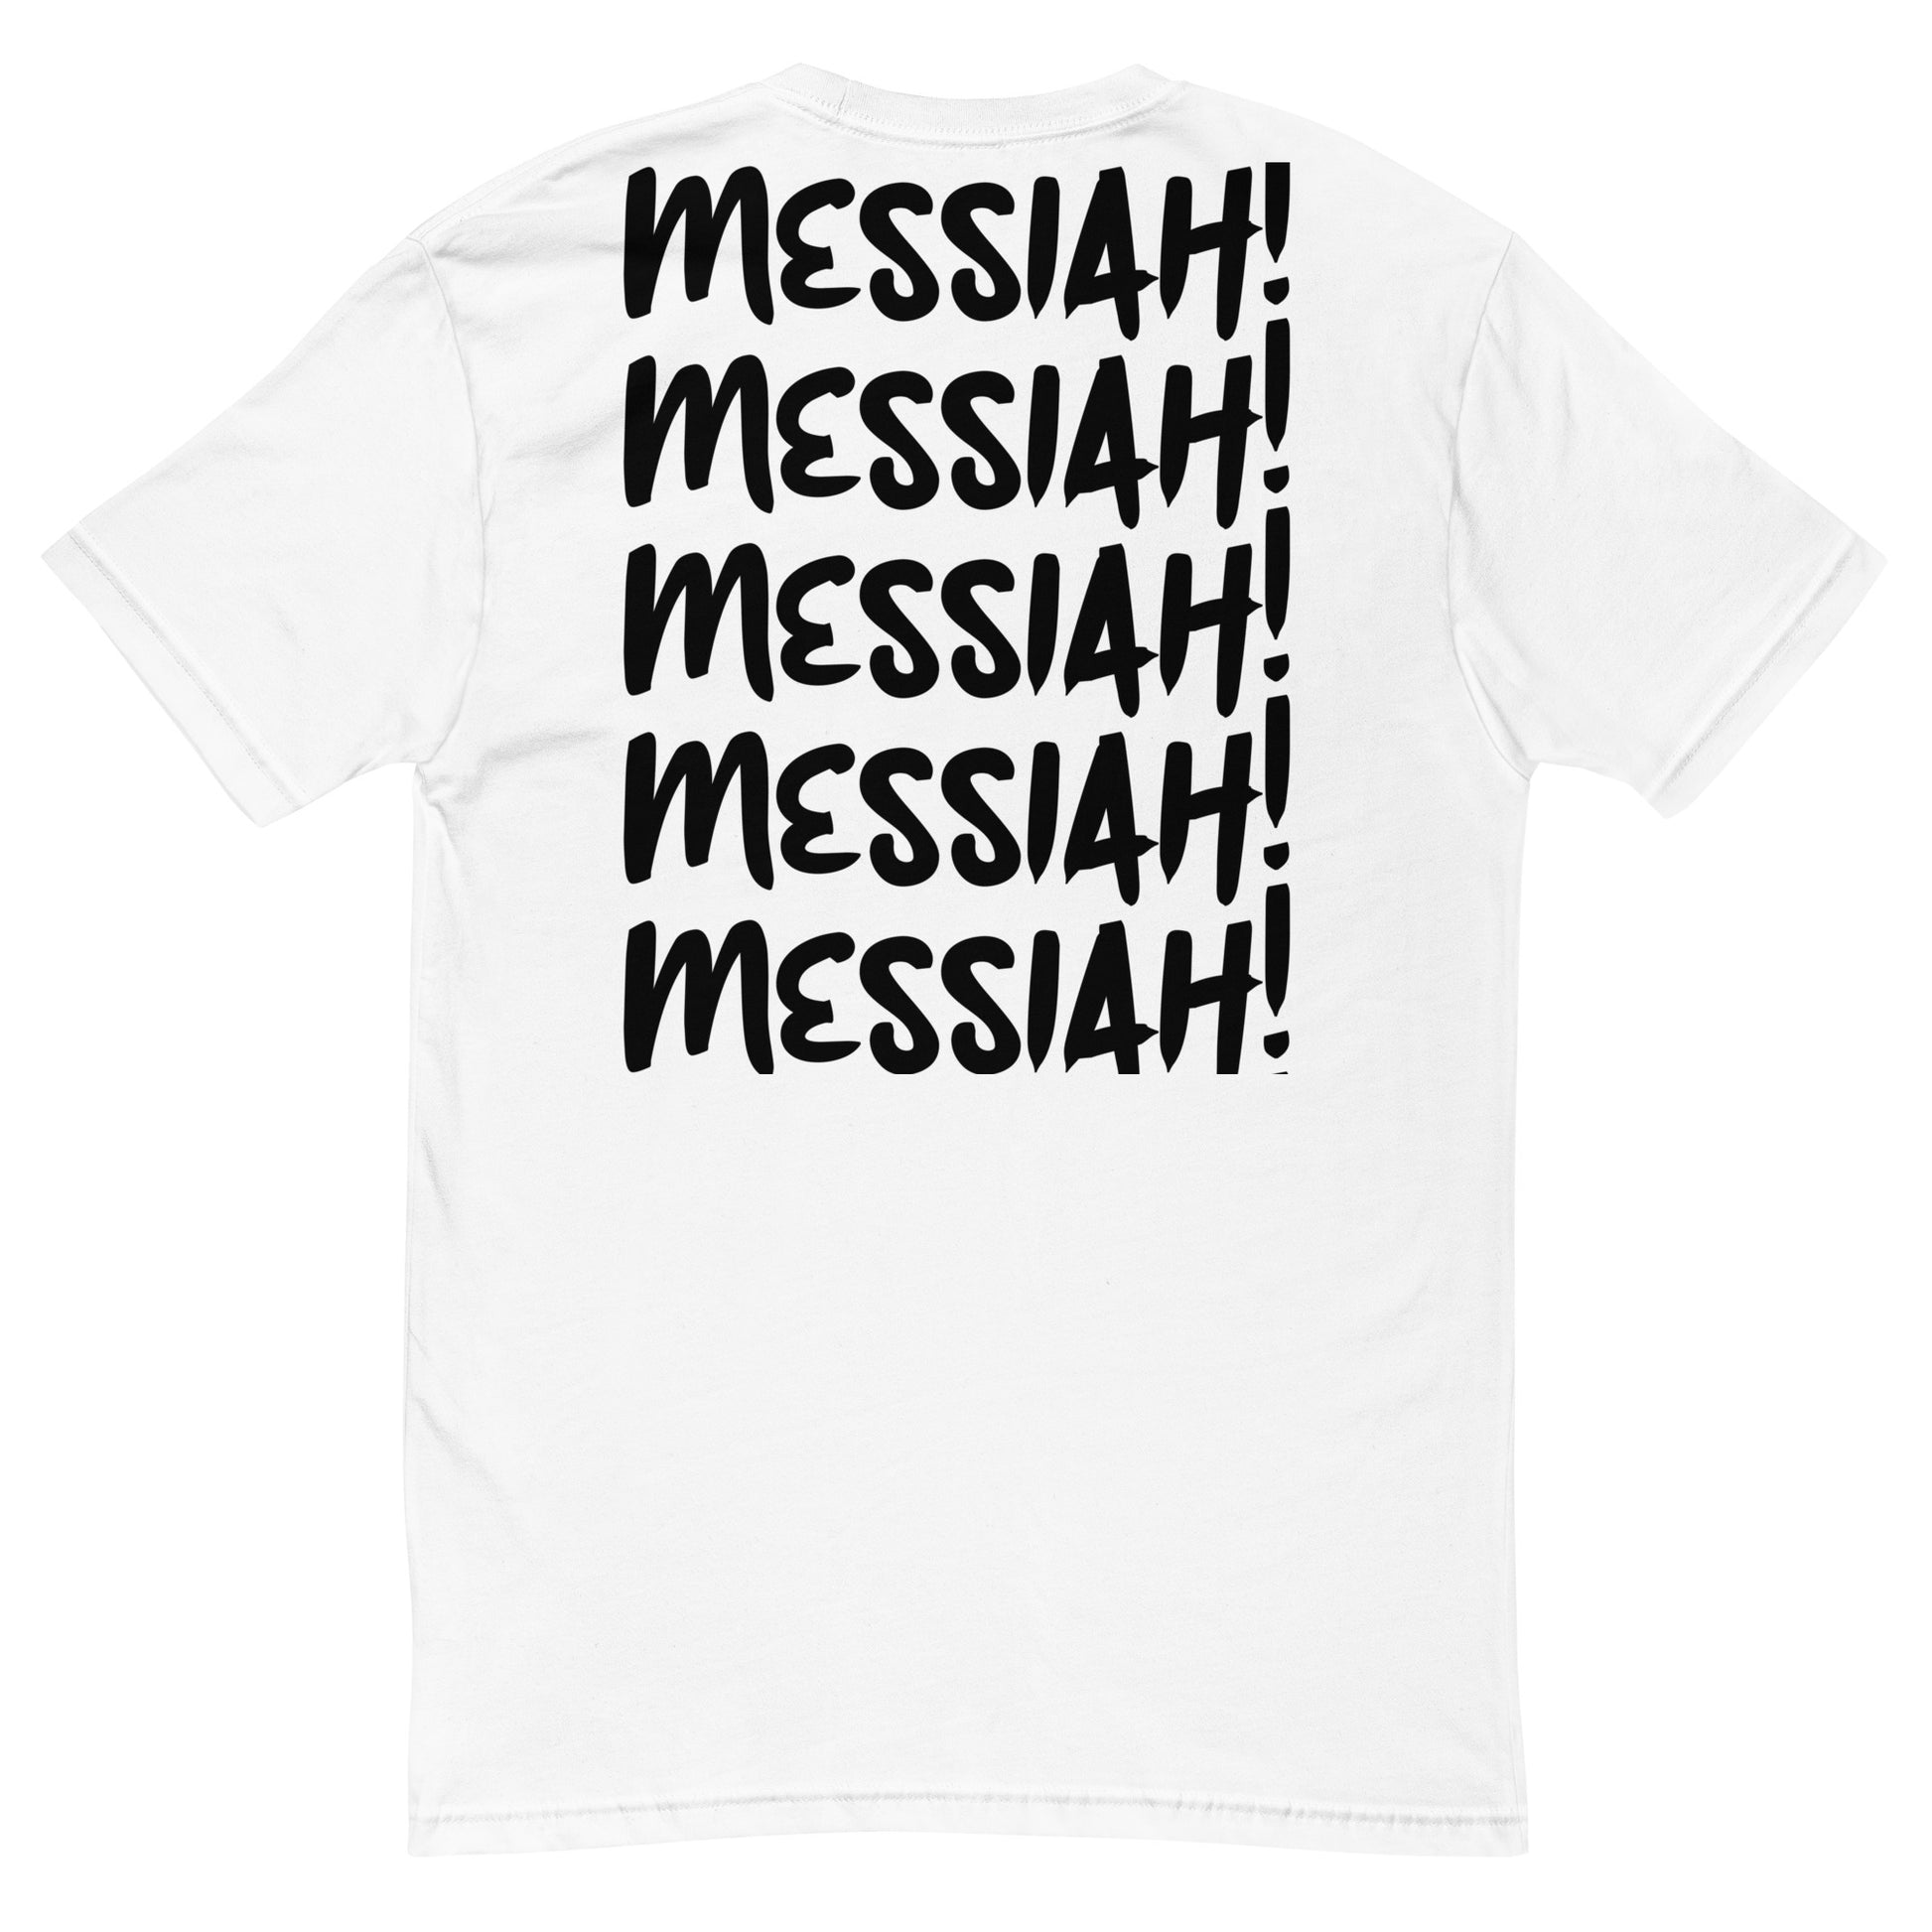 Sqdltd Messiiah 10 Short Sleeve Tee BL